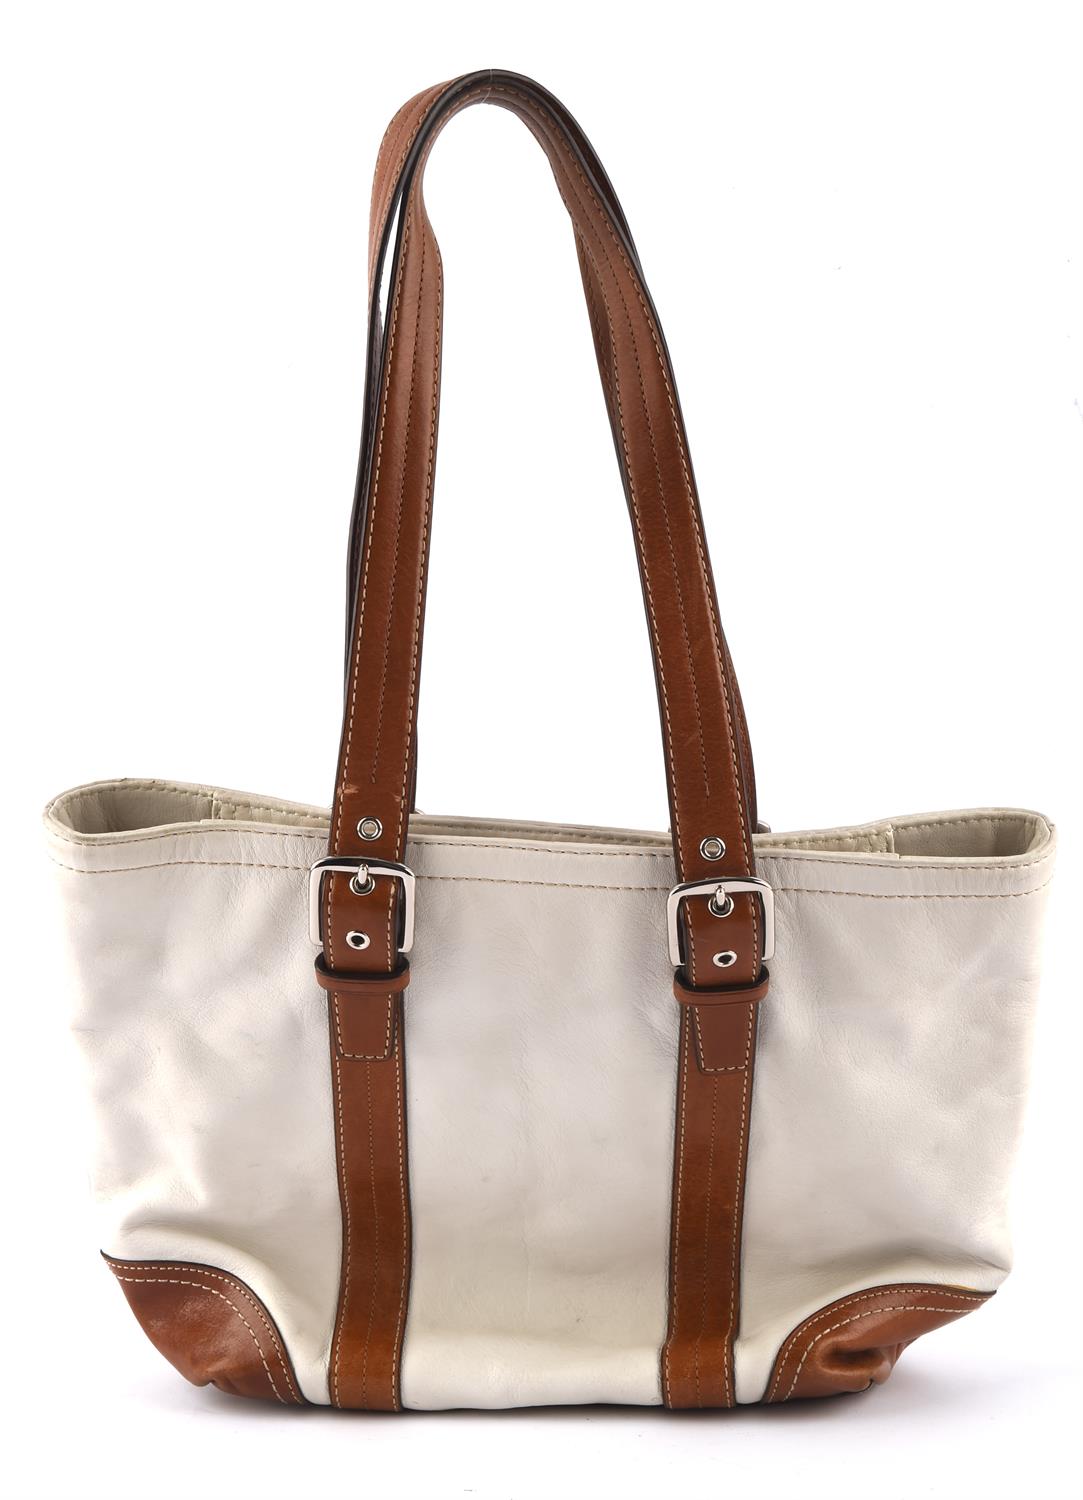 COACH 1990s white and brown leather handbag (33cm x 27cm x 8cm) - Image 2 of 2